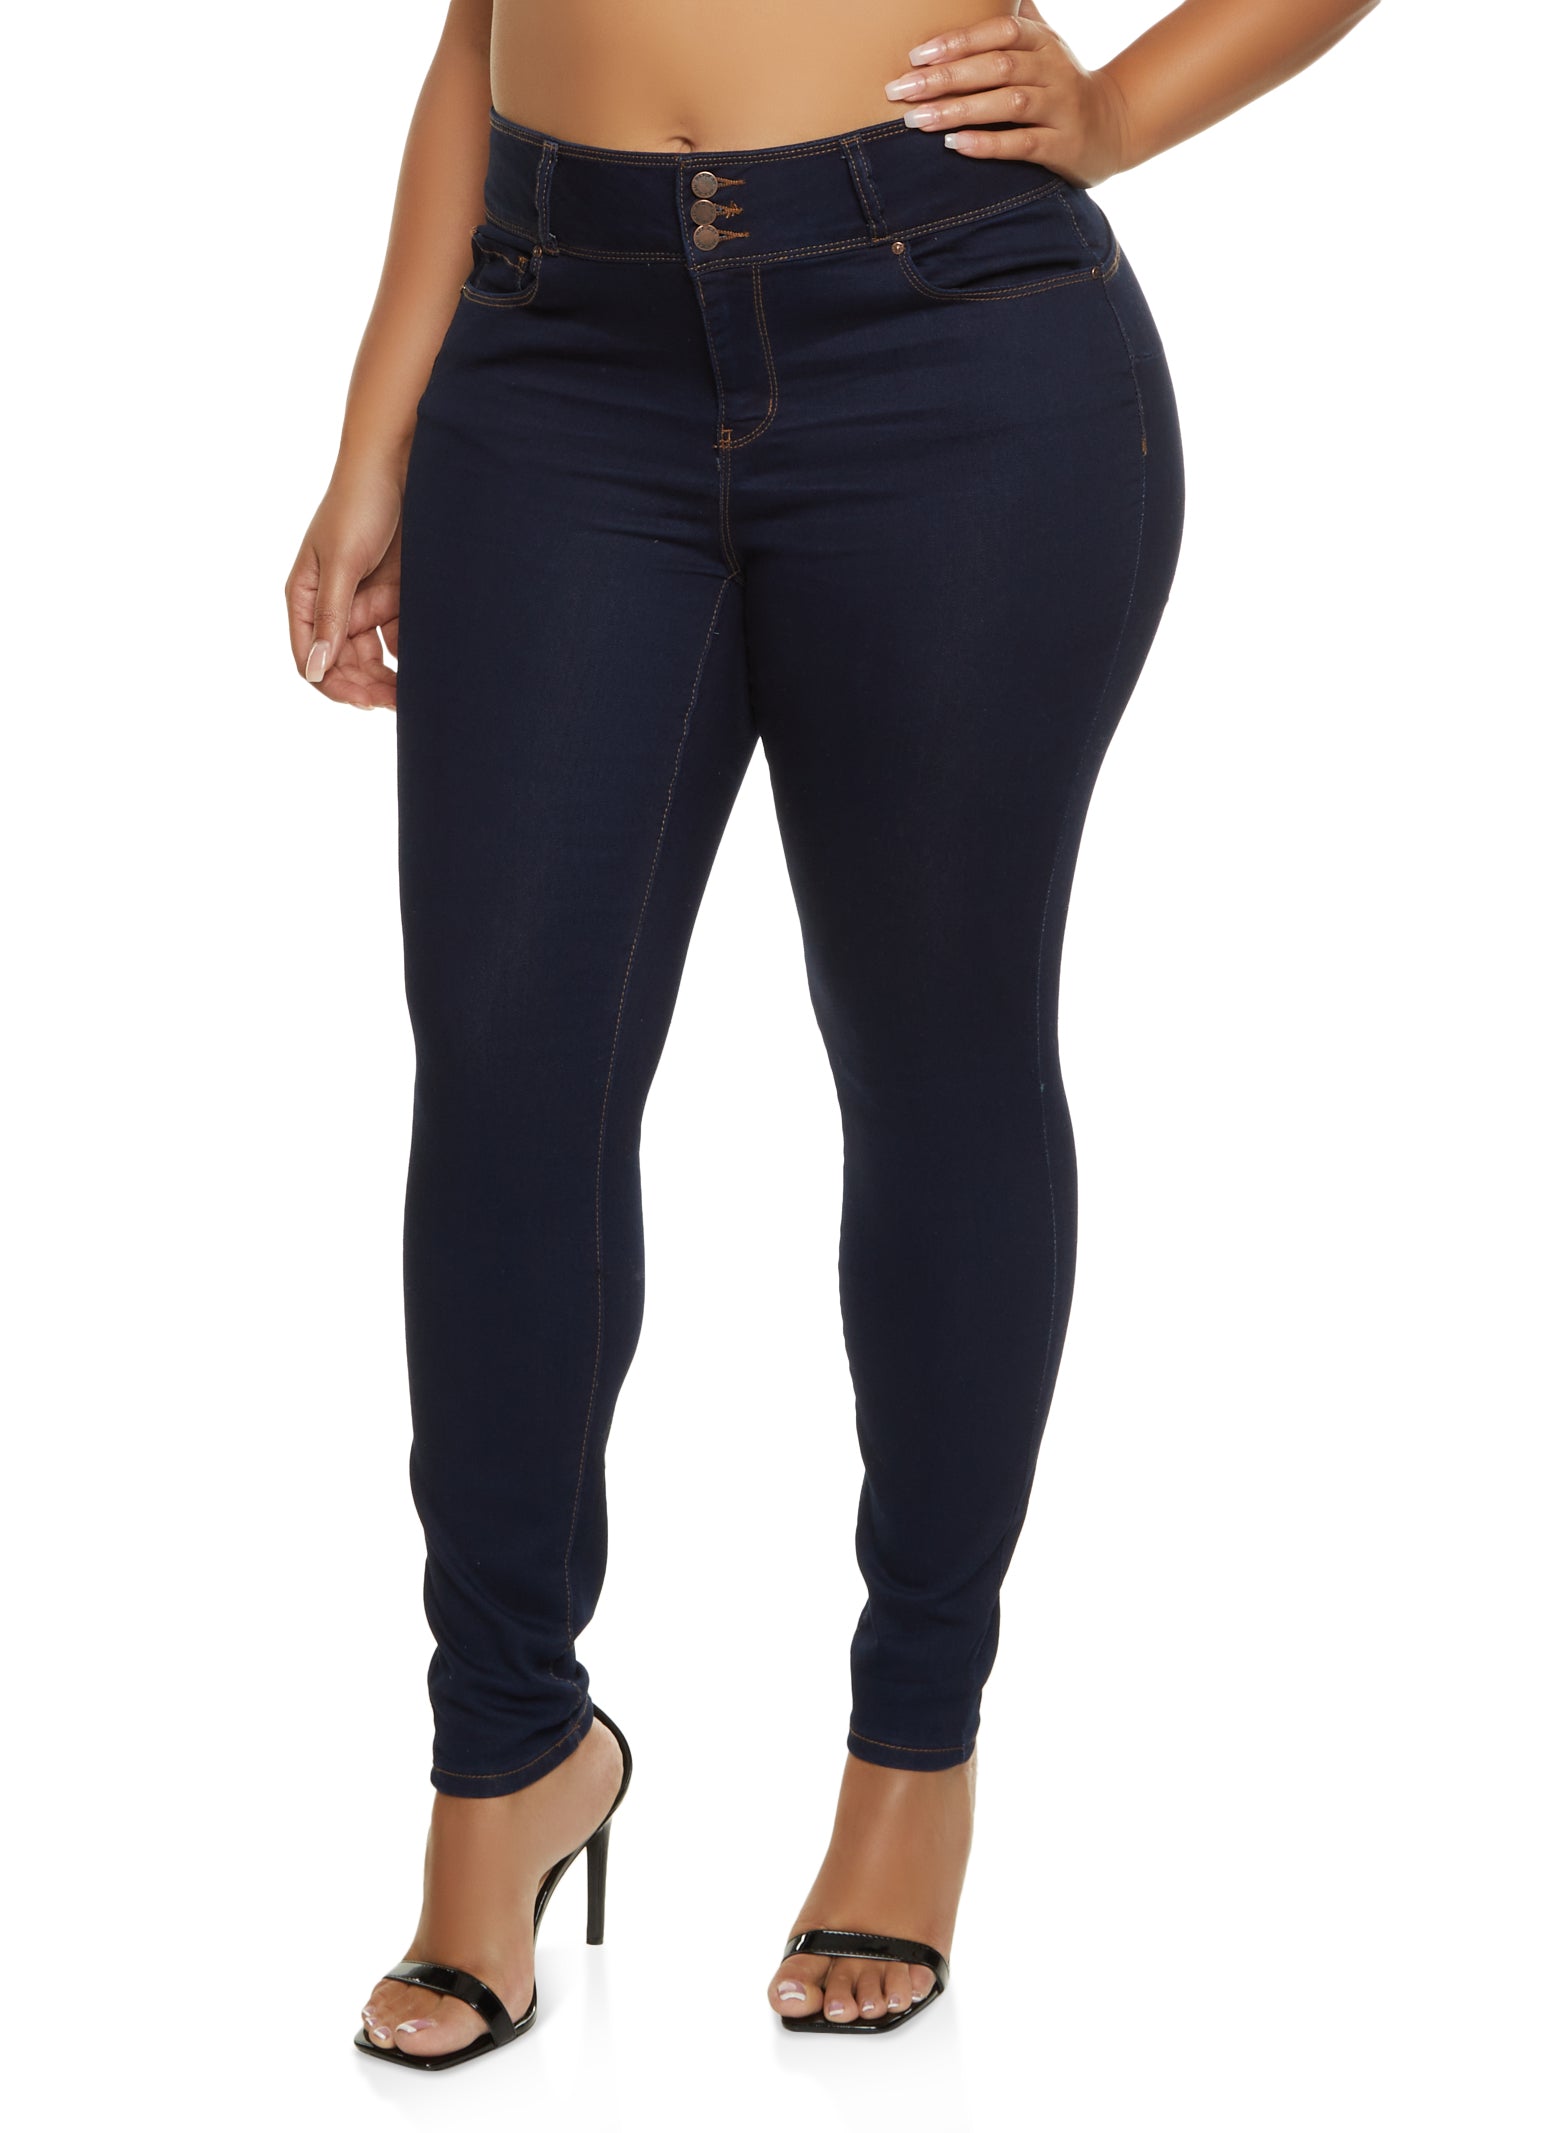 Plus Size Women's Fashion Summer Slim Fit Capri Jeans High Waist 3